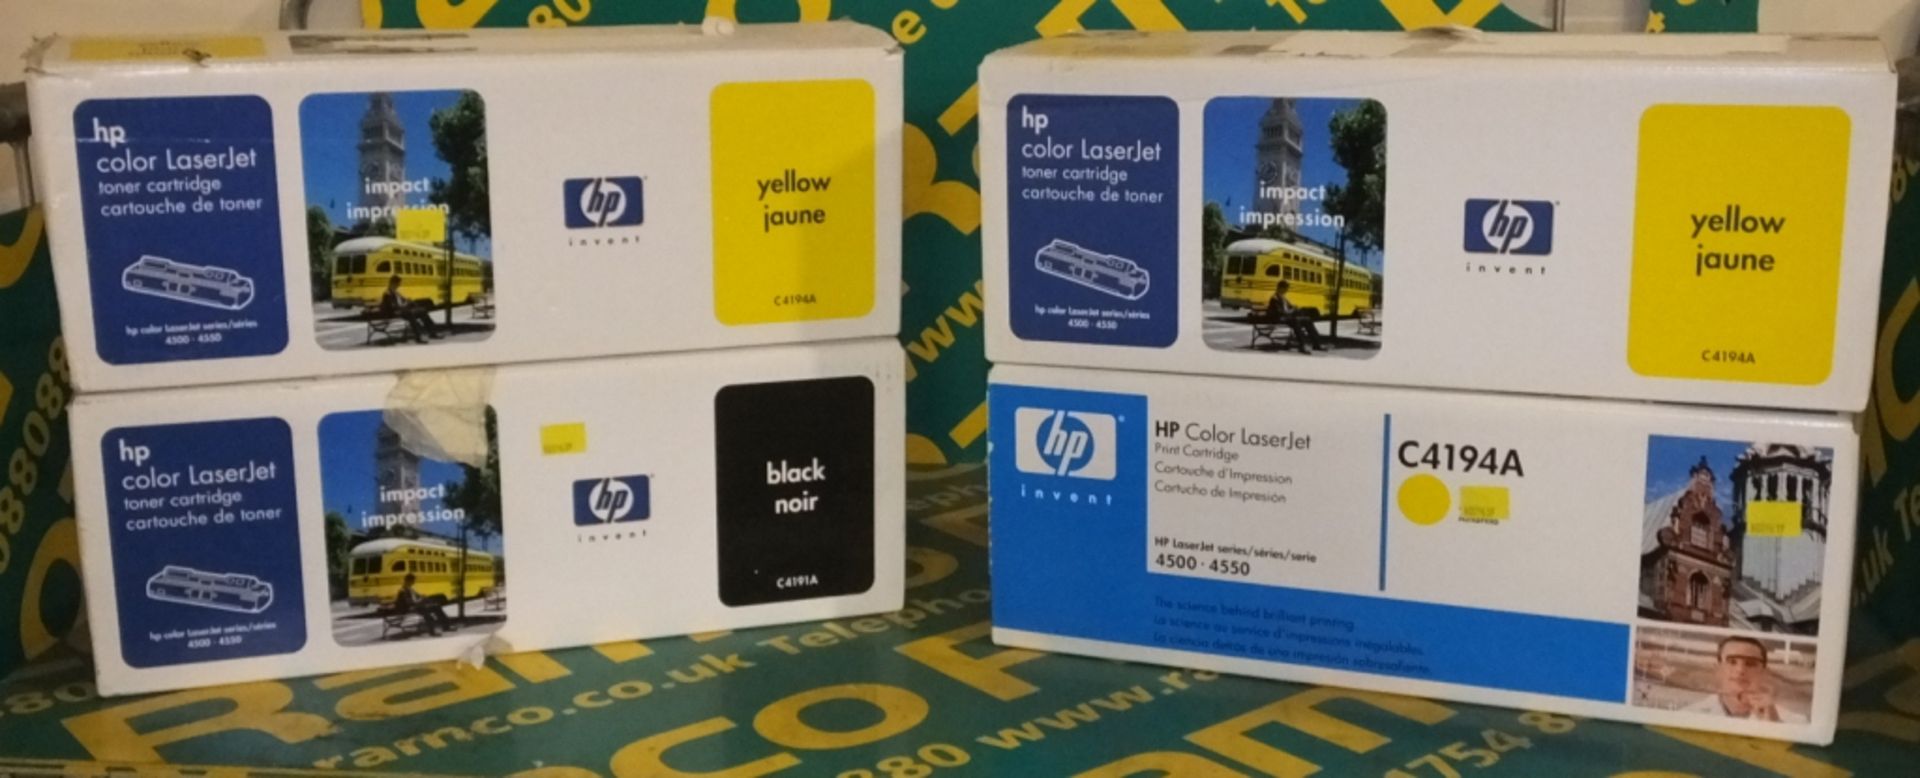 3x HP Printer Cartridges - Yellow C4194A, 1x HP Printer Cartridge - BLack C4191A